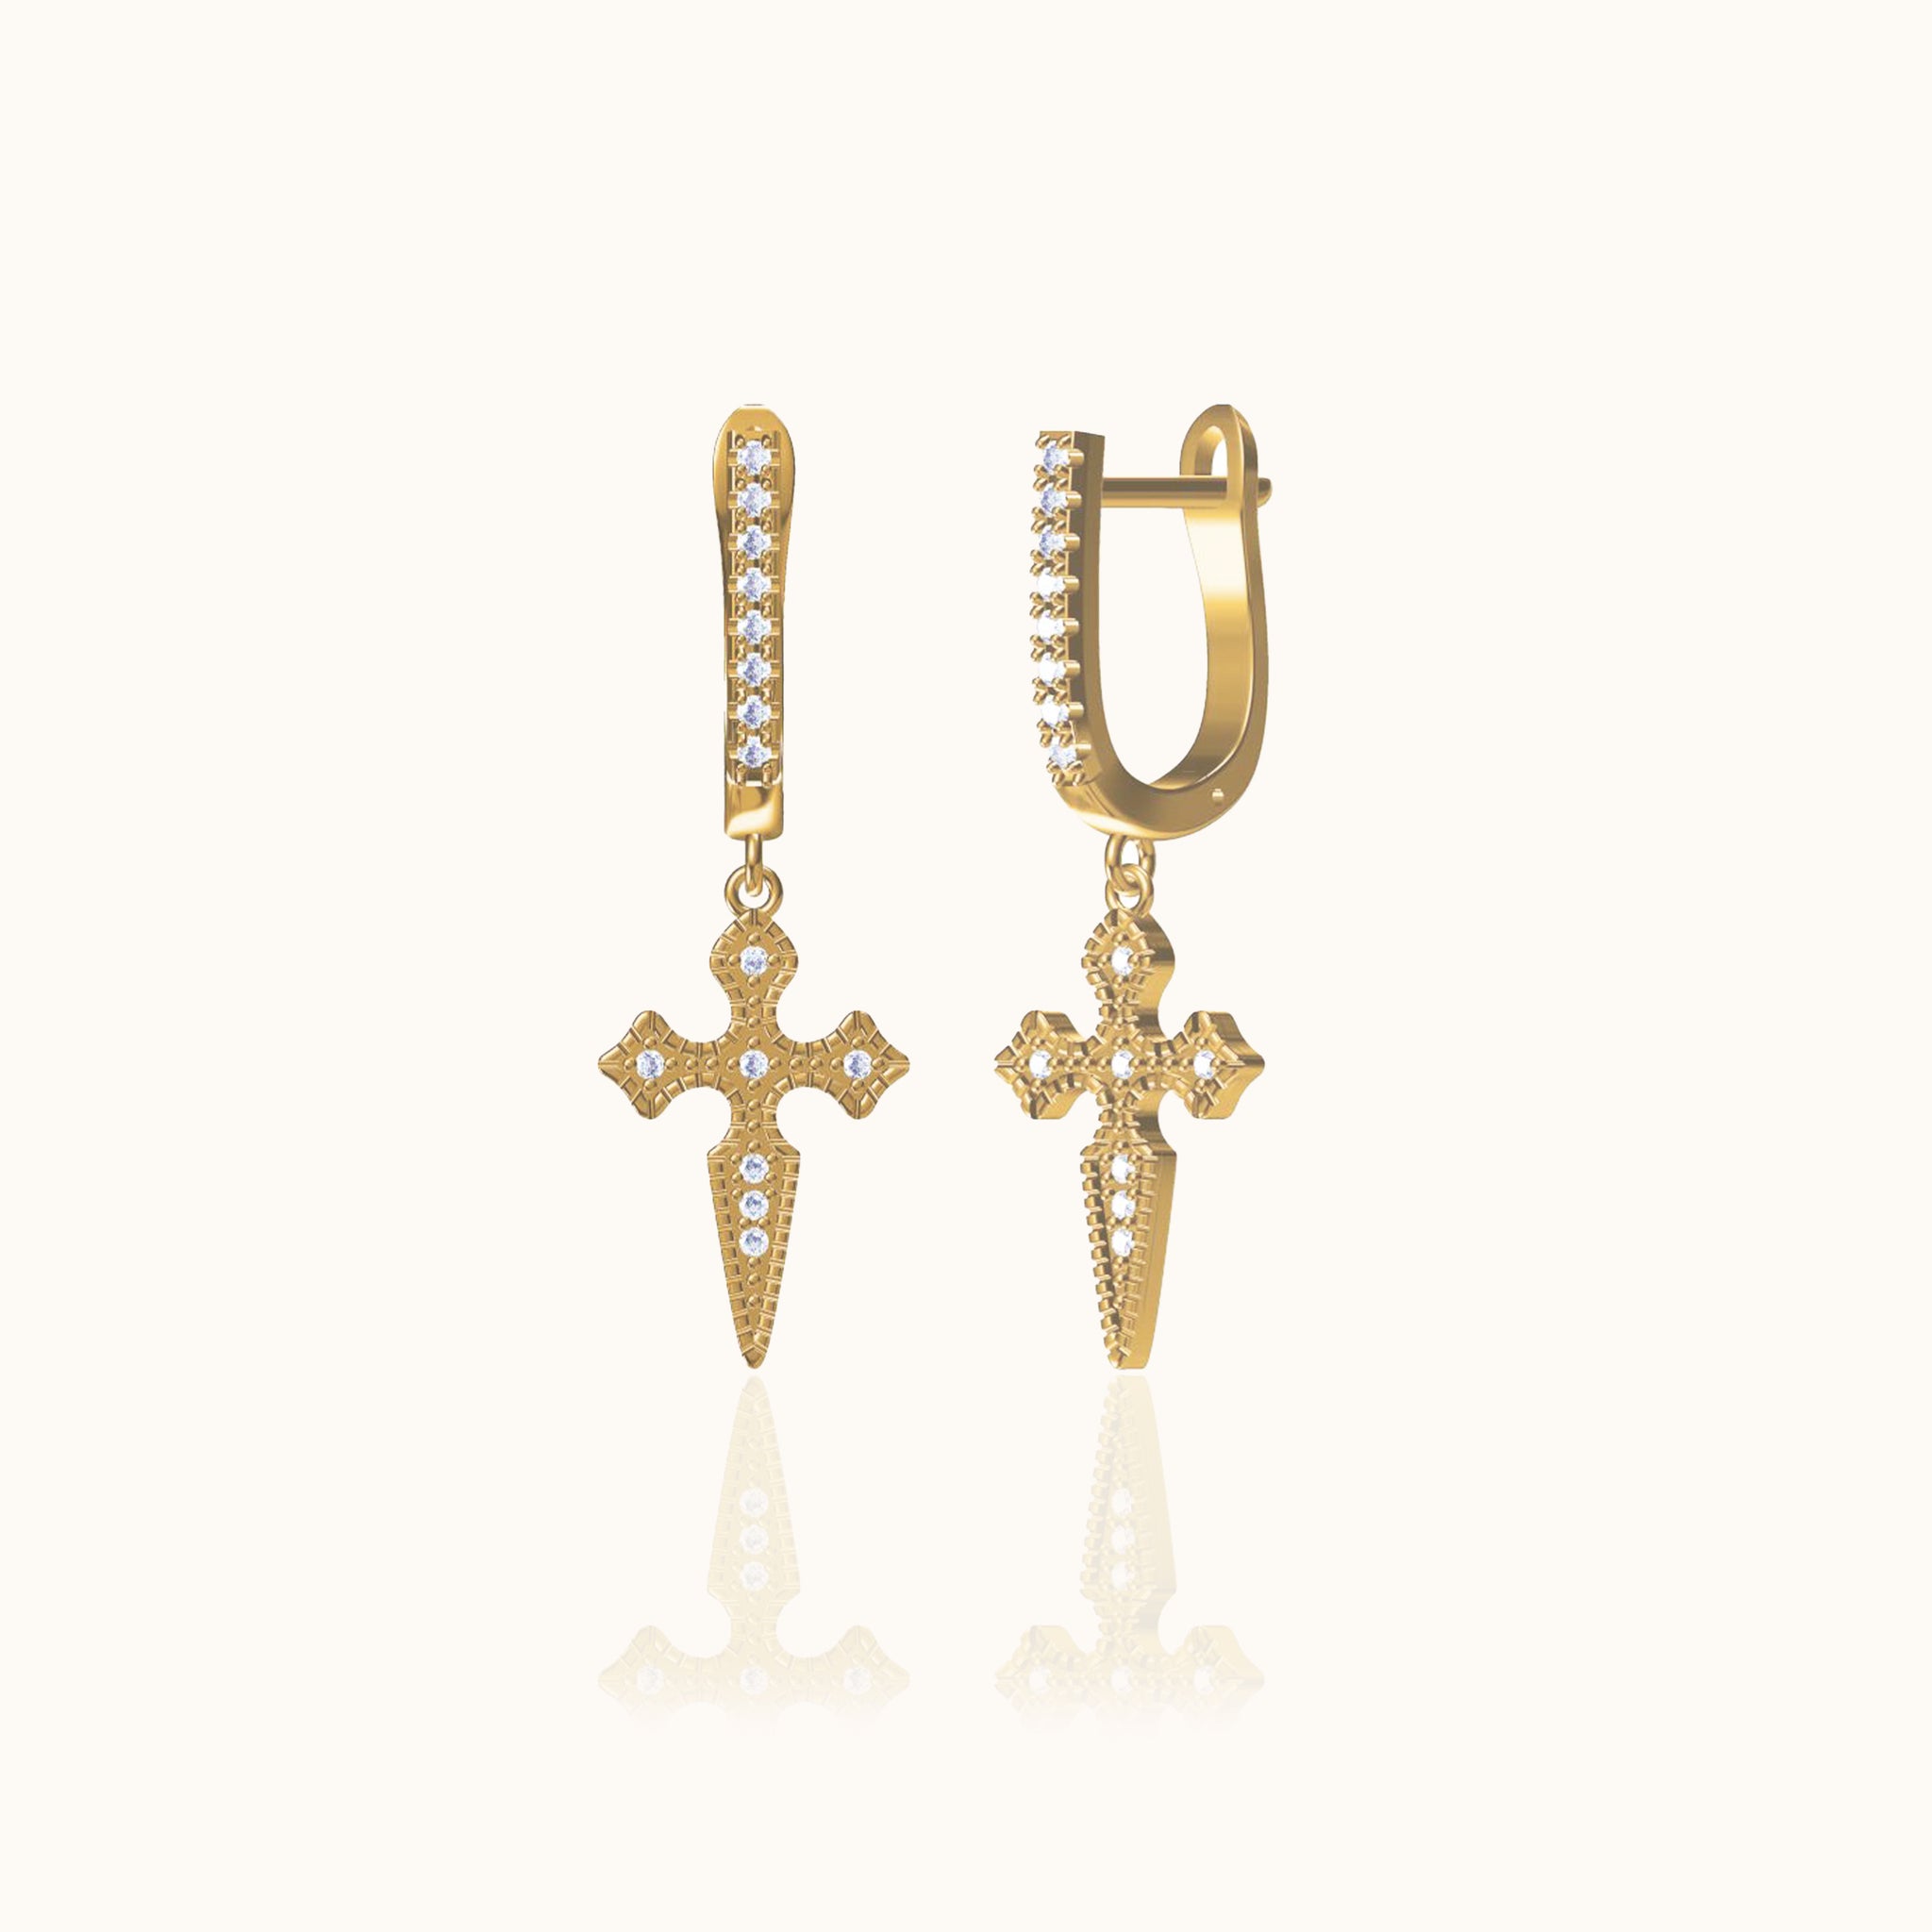 Cross CZ Gothic Latch Back Earrings Gold Hanging Studded Cross Huggie Hoops by Doviana